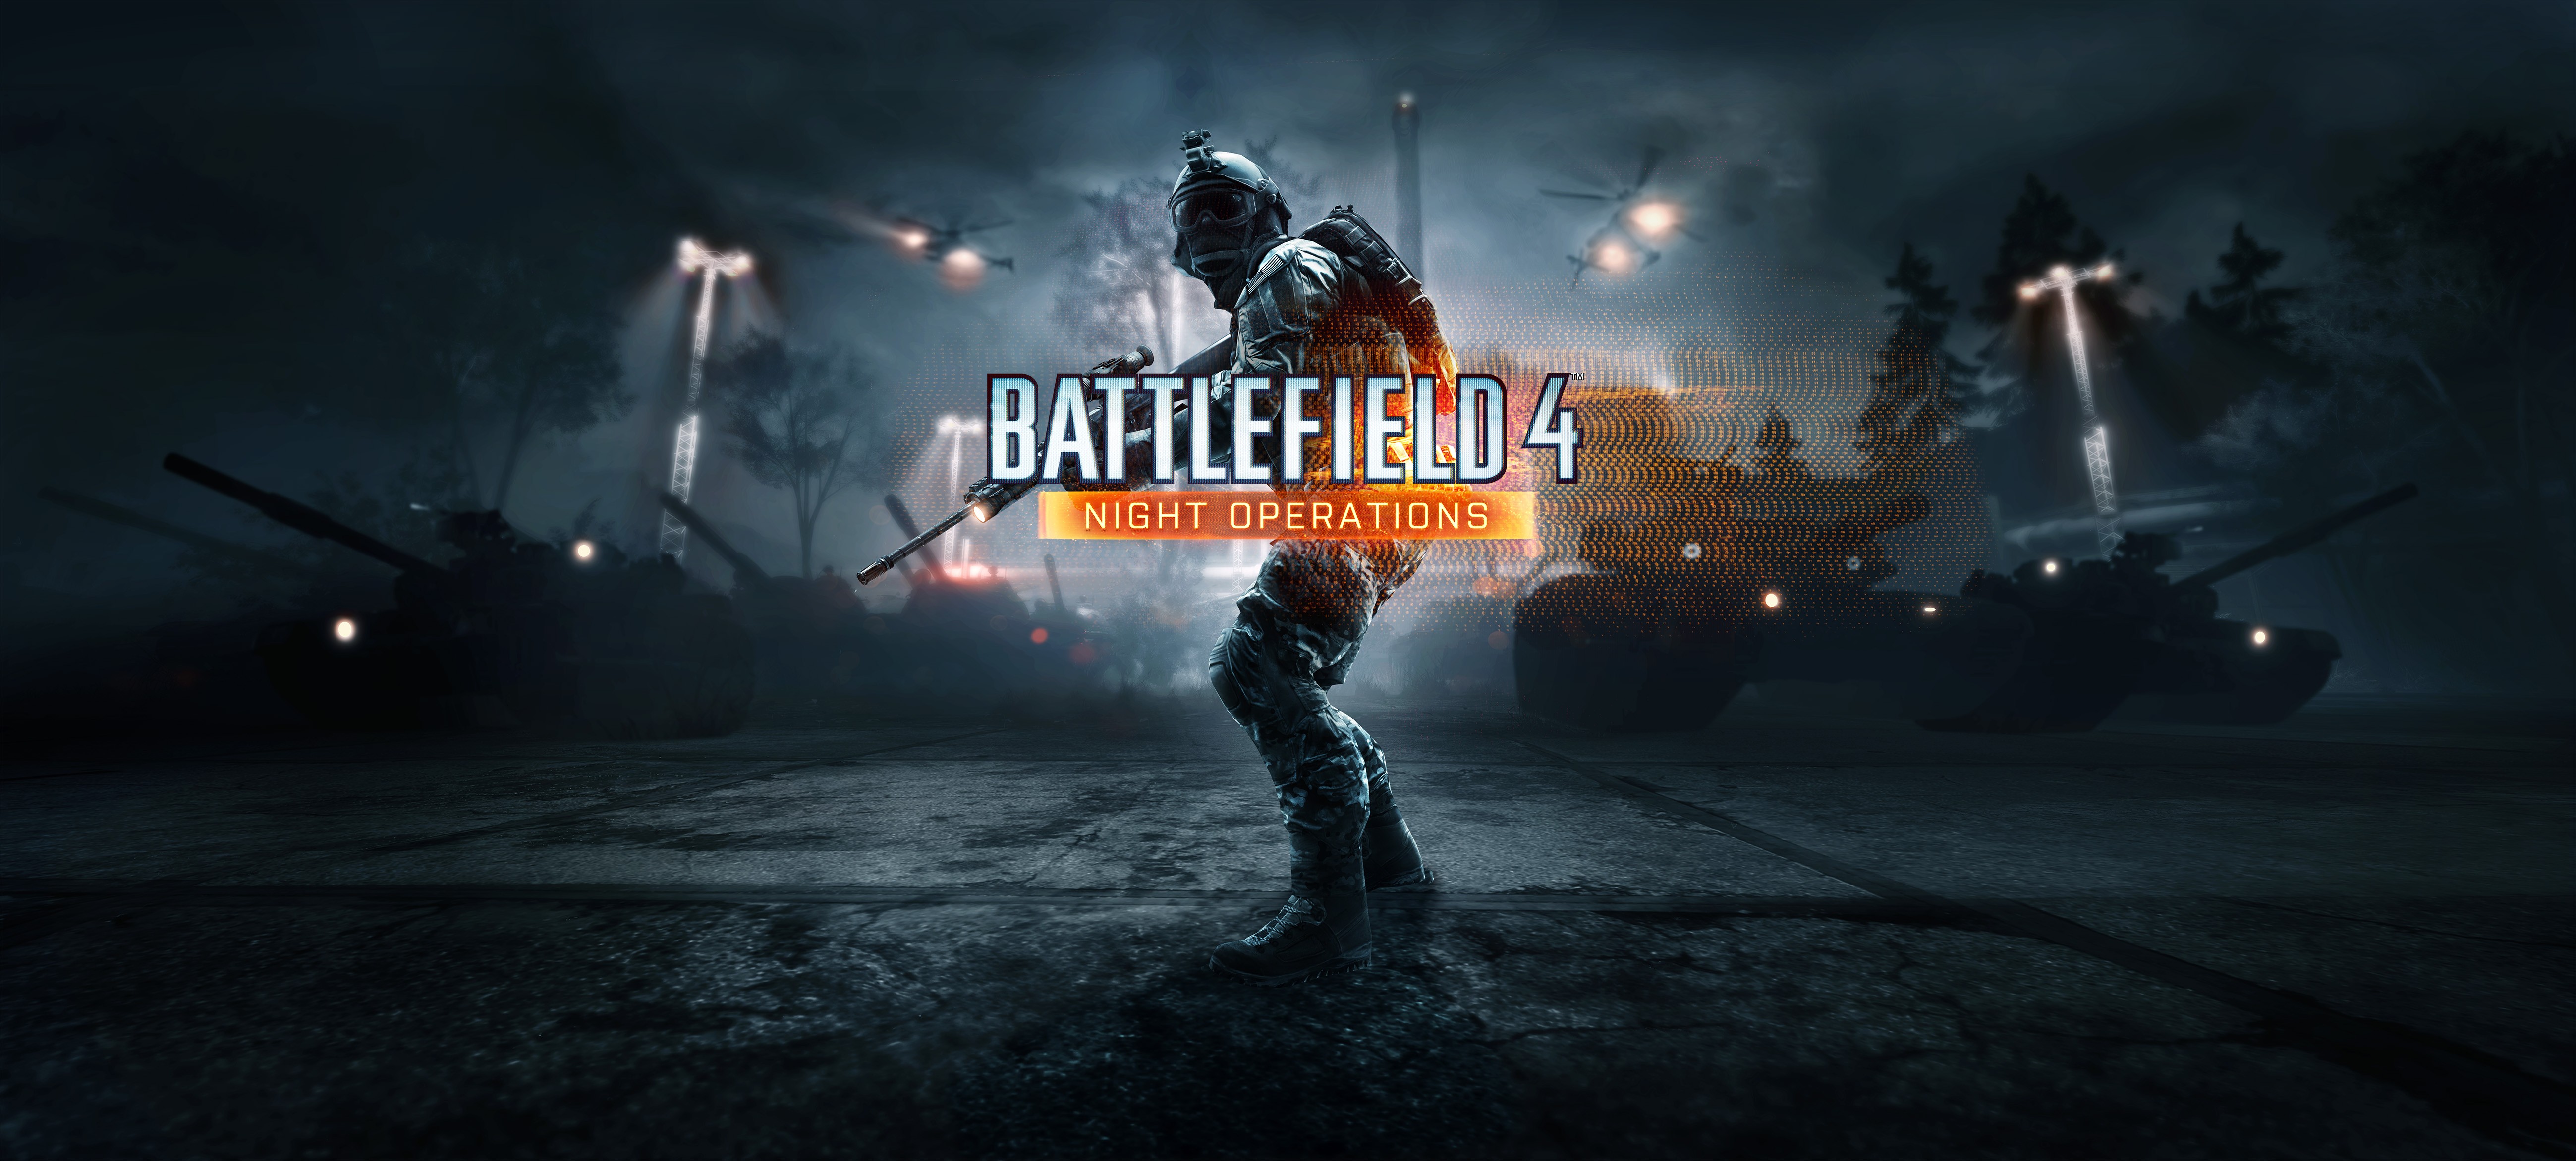 Battlefield 4, Battlefield 4: night operations, EA, Dice, EA DICE, EA Games, Military, PC gaming Wallpaper